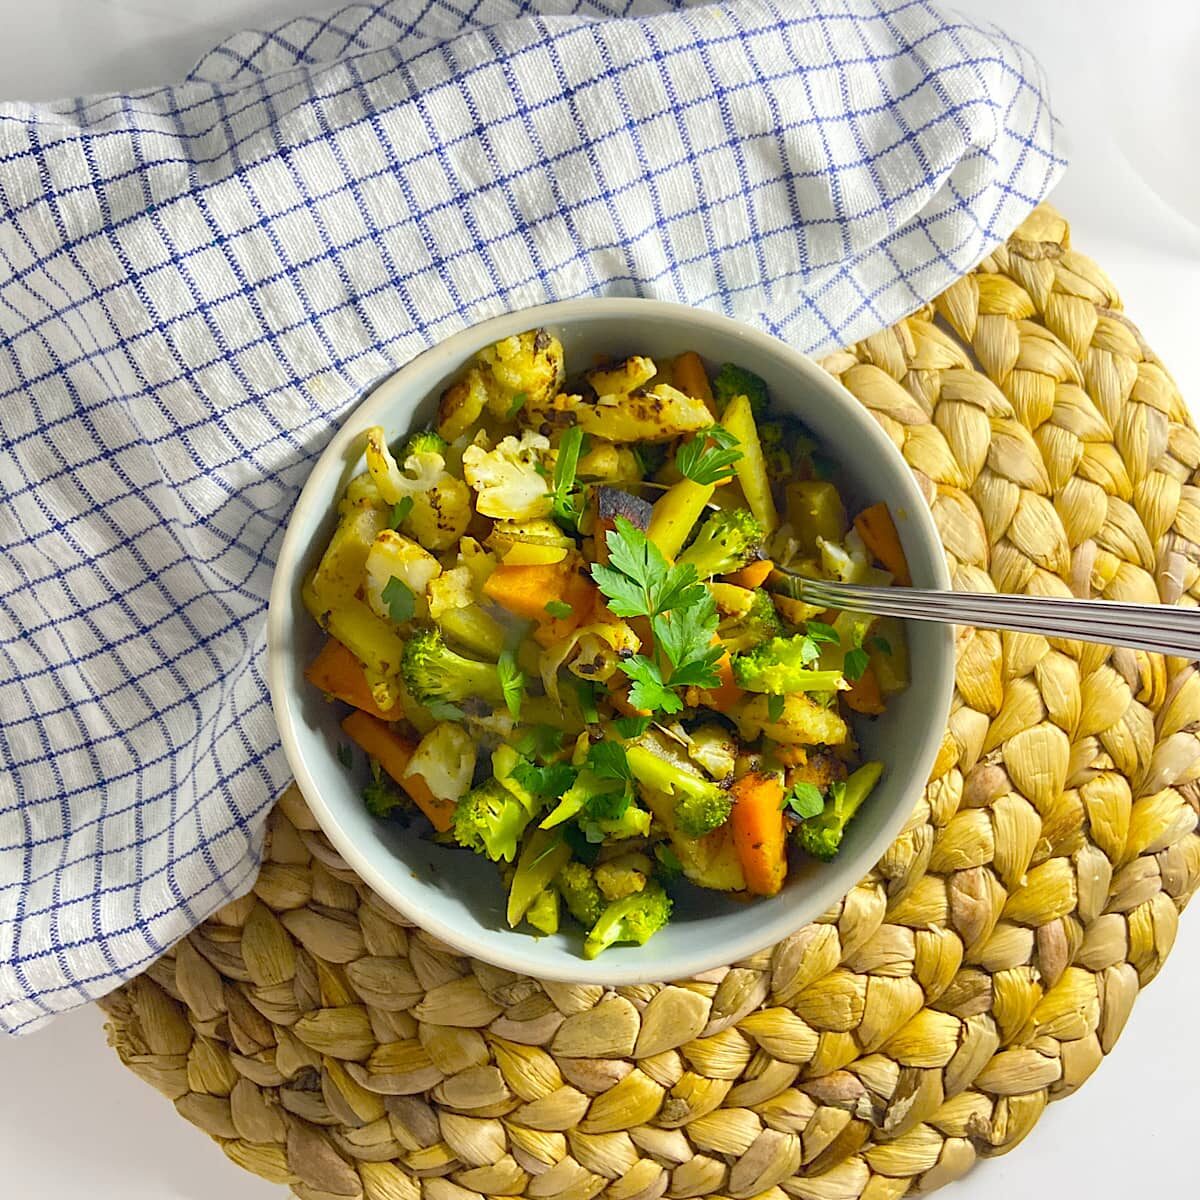 bowl of sauteed broccoli, cauliflower, and potatoes